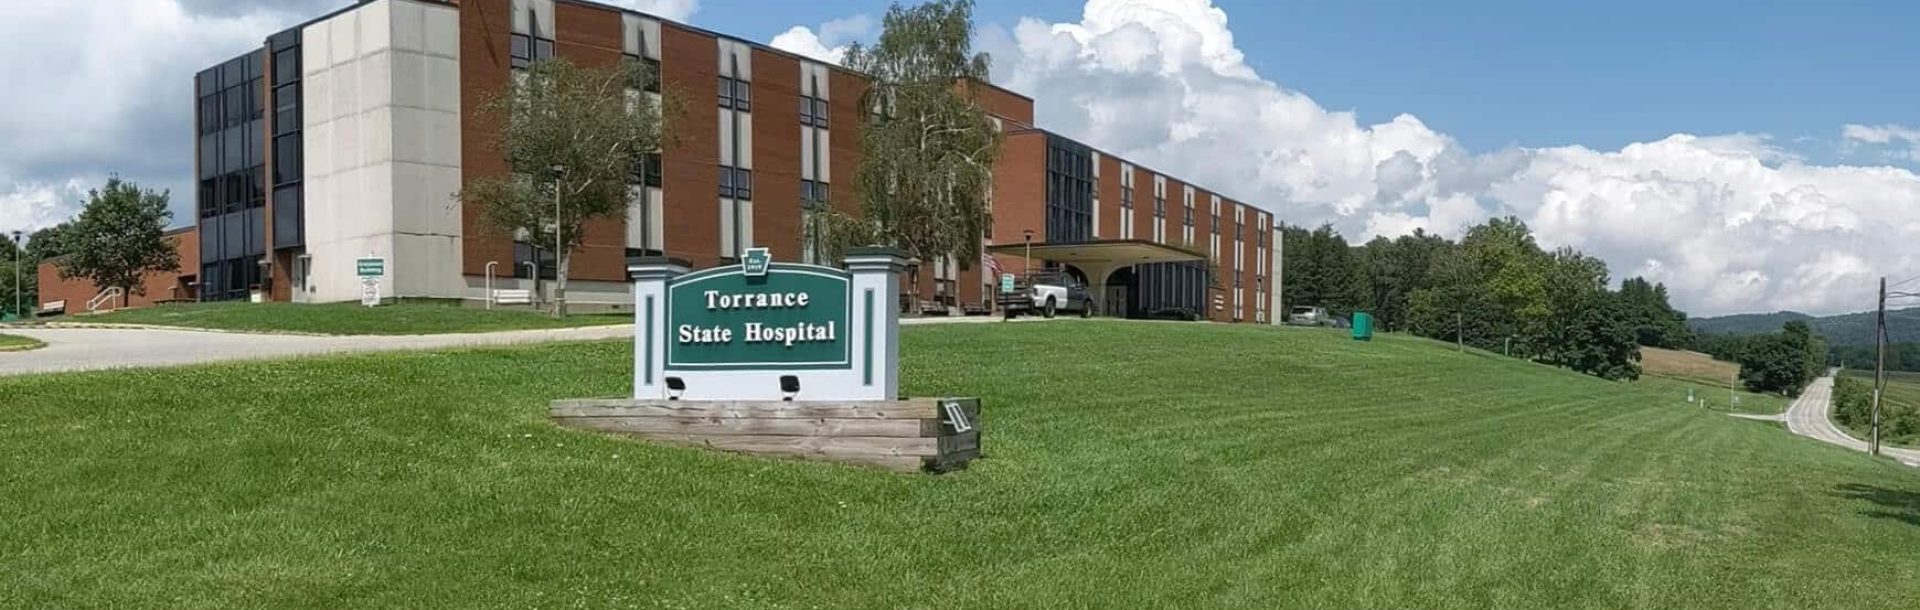 Torrance State Hospital